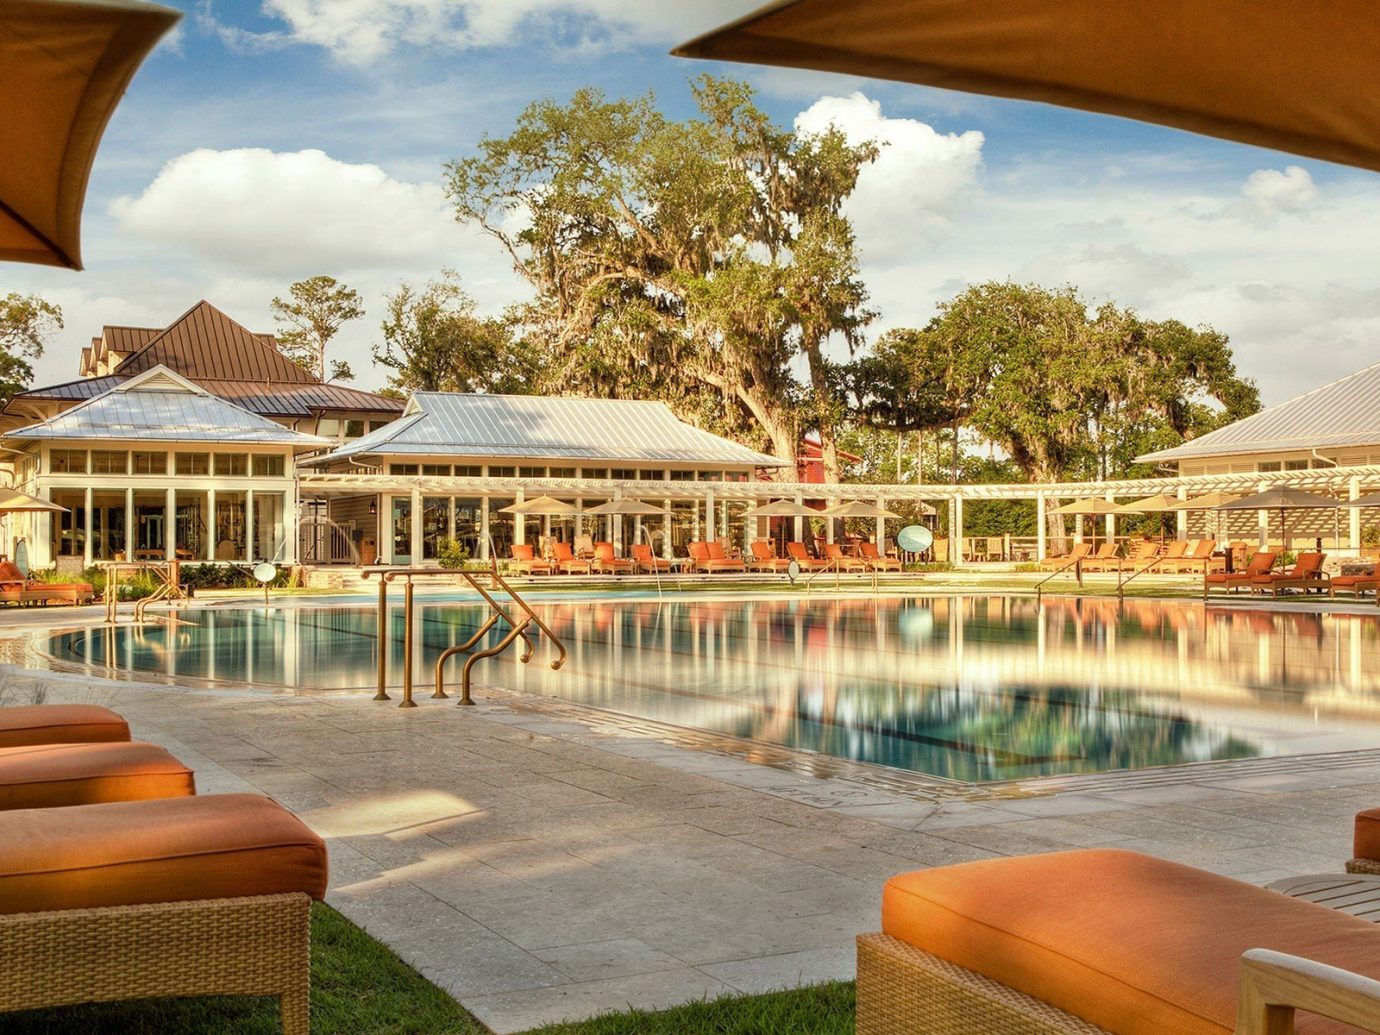 Hotels outdoor chair leisure Resort vacation swimming pool estate orange palace Villa hacienda furniture